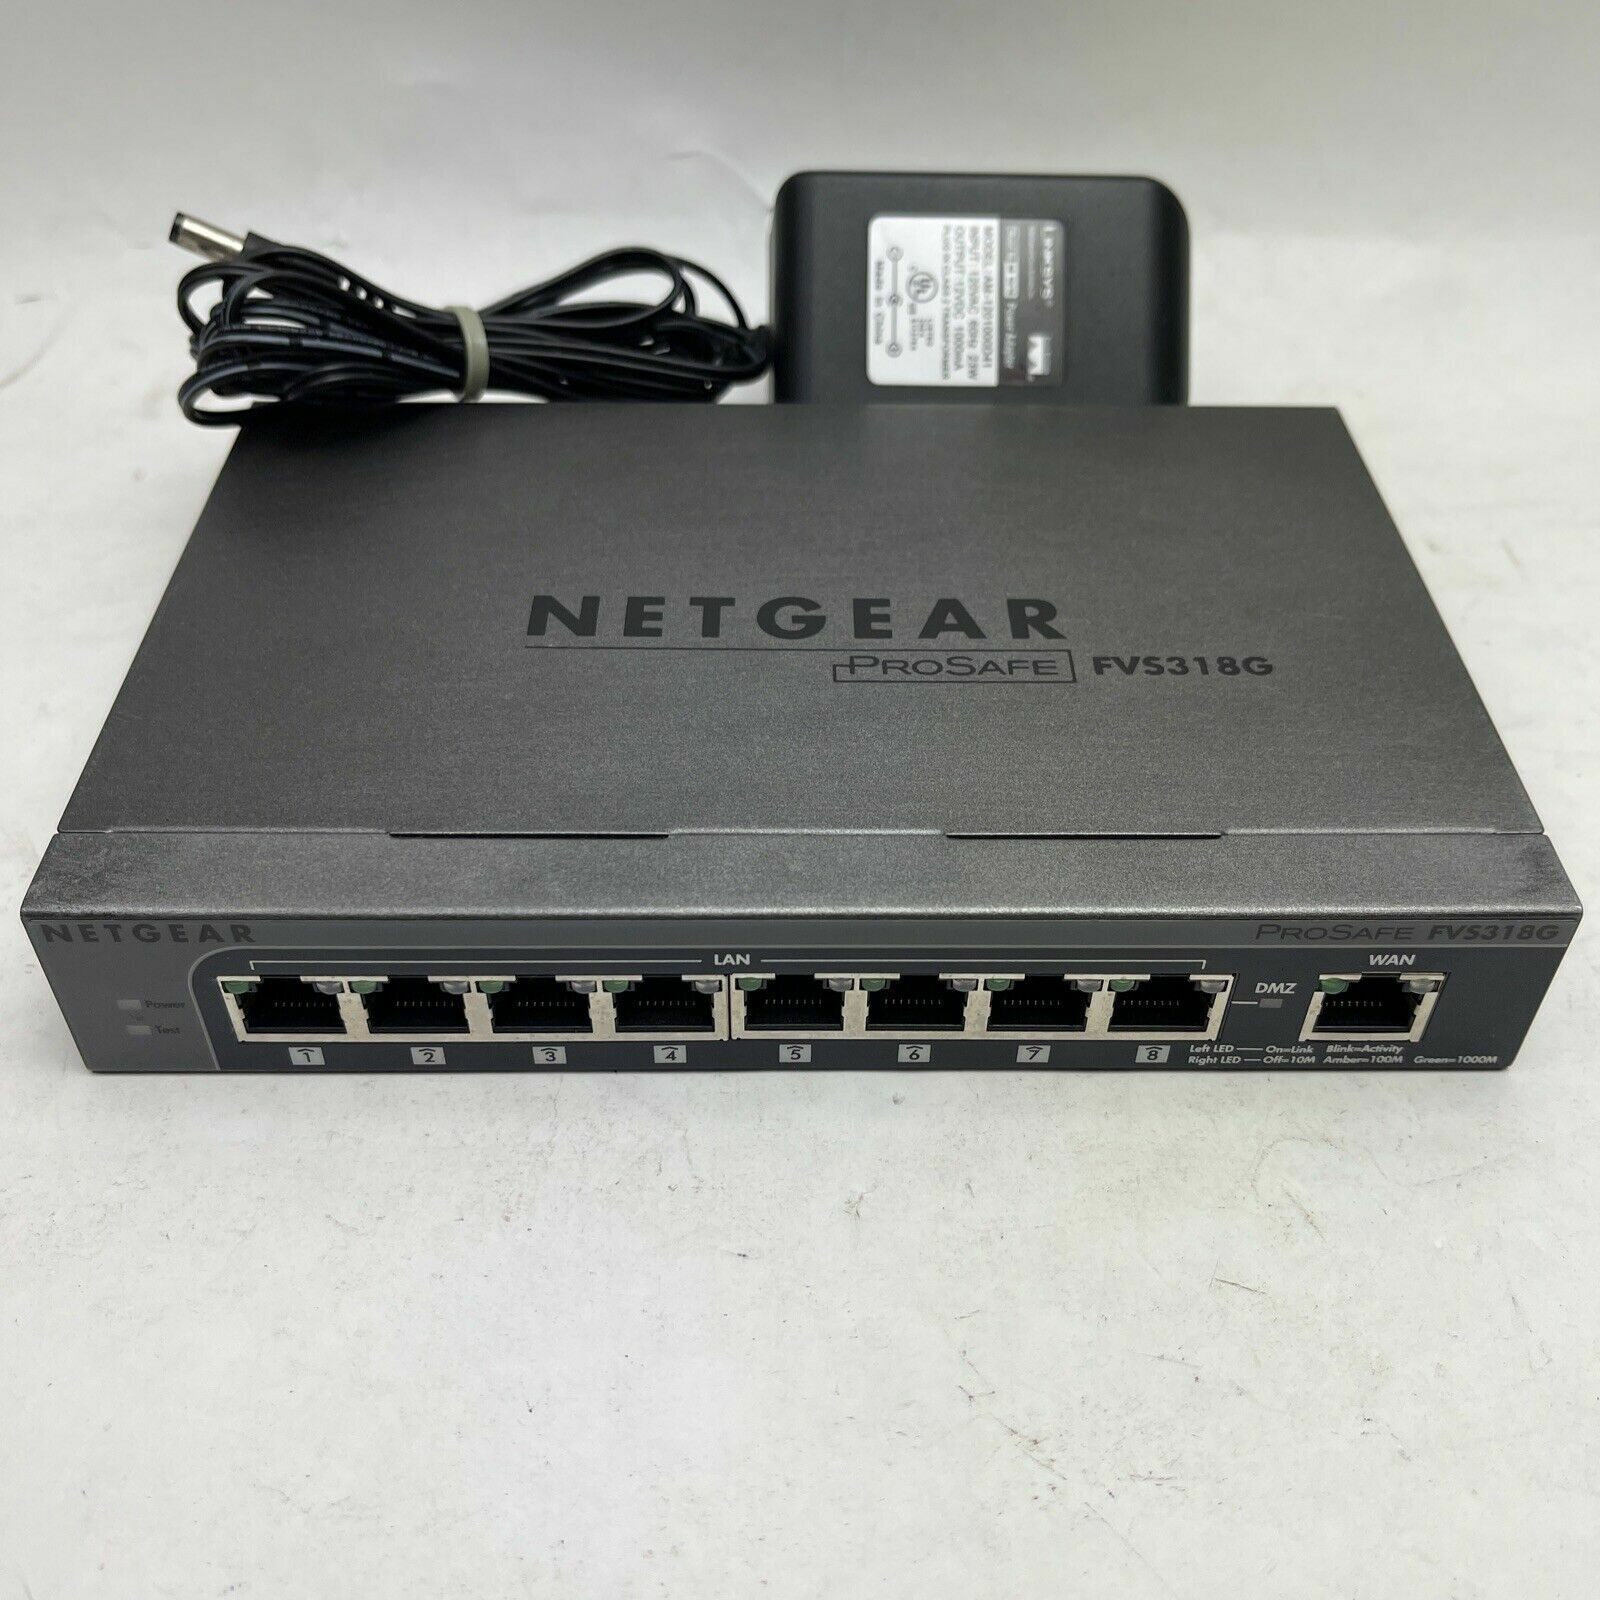 NETGEAR FVS318G v2 ProSafe VPN Firewall Adapter Included 